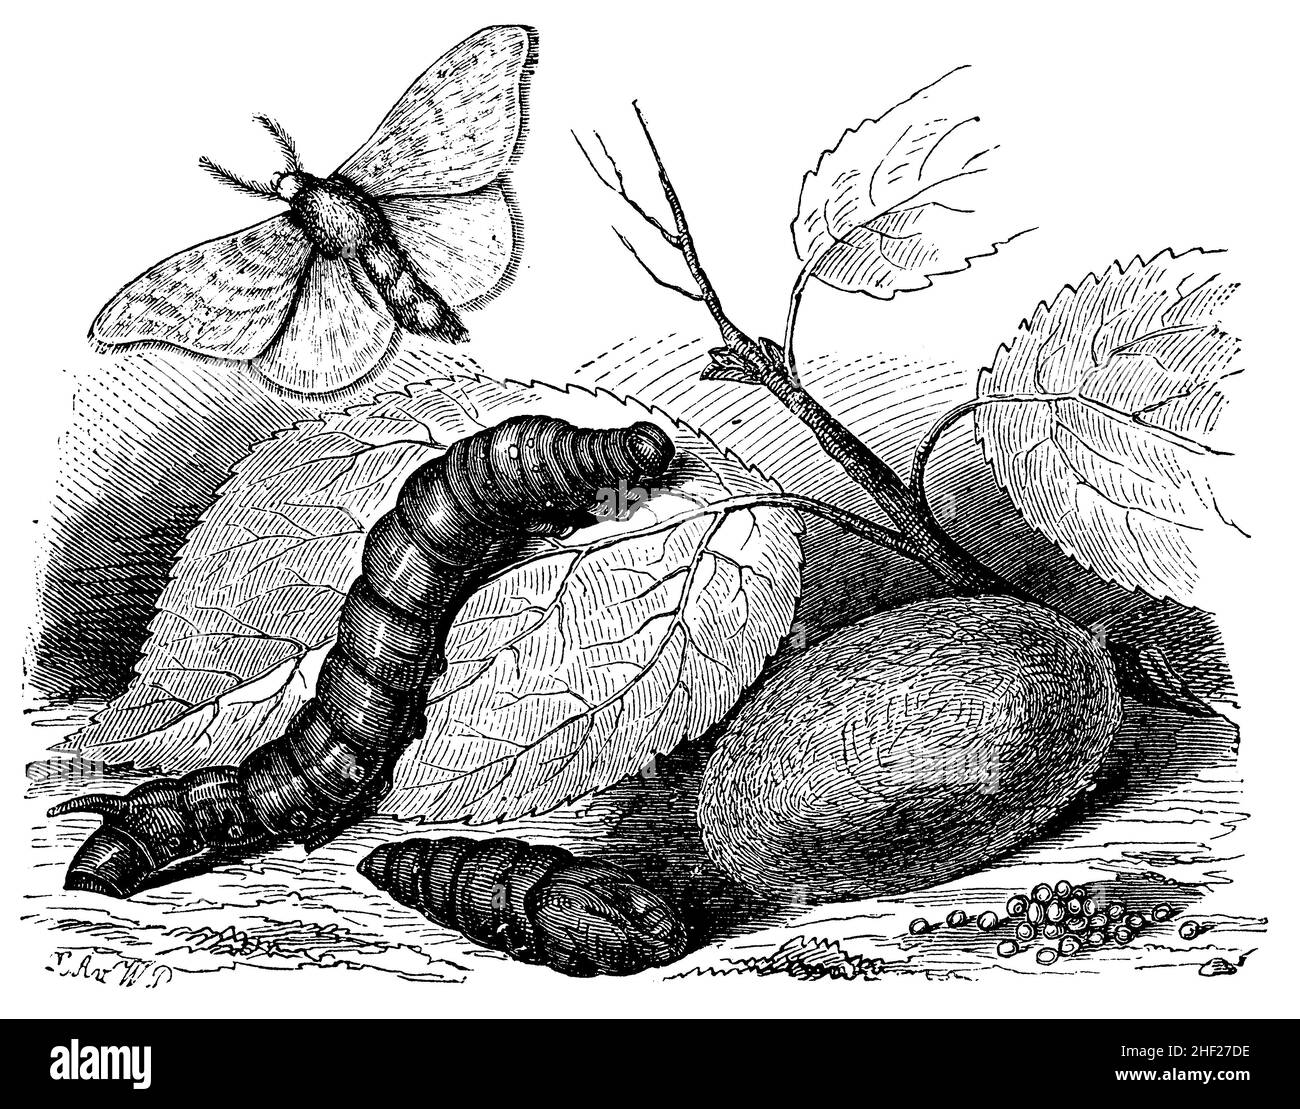 Seta, Bombyx mori, W.P.? (Libro di storia naturale, 1886), Seidenspinner, mit Raupe, Puppe und Kokon, Bombyx du Mûrier Foto Stock